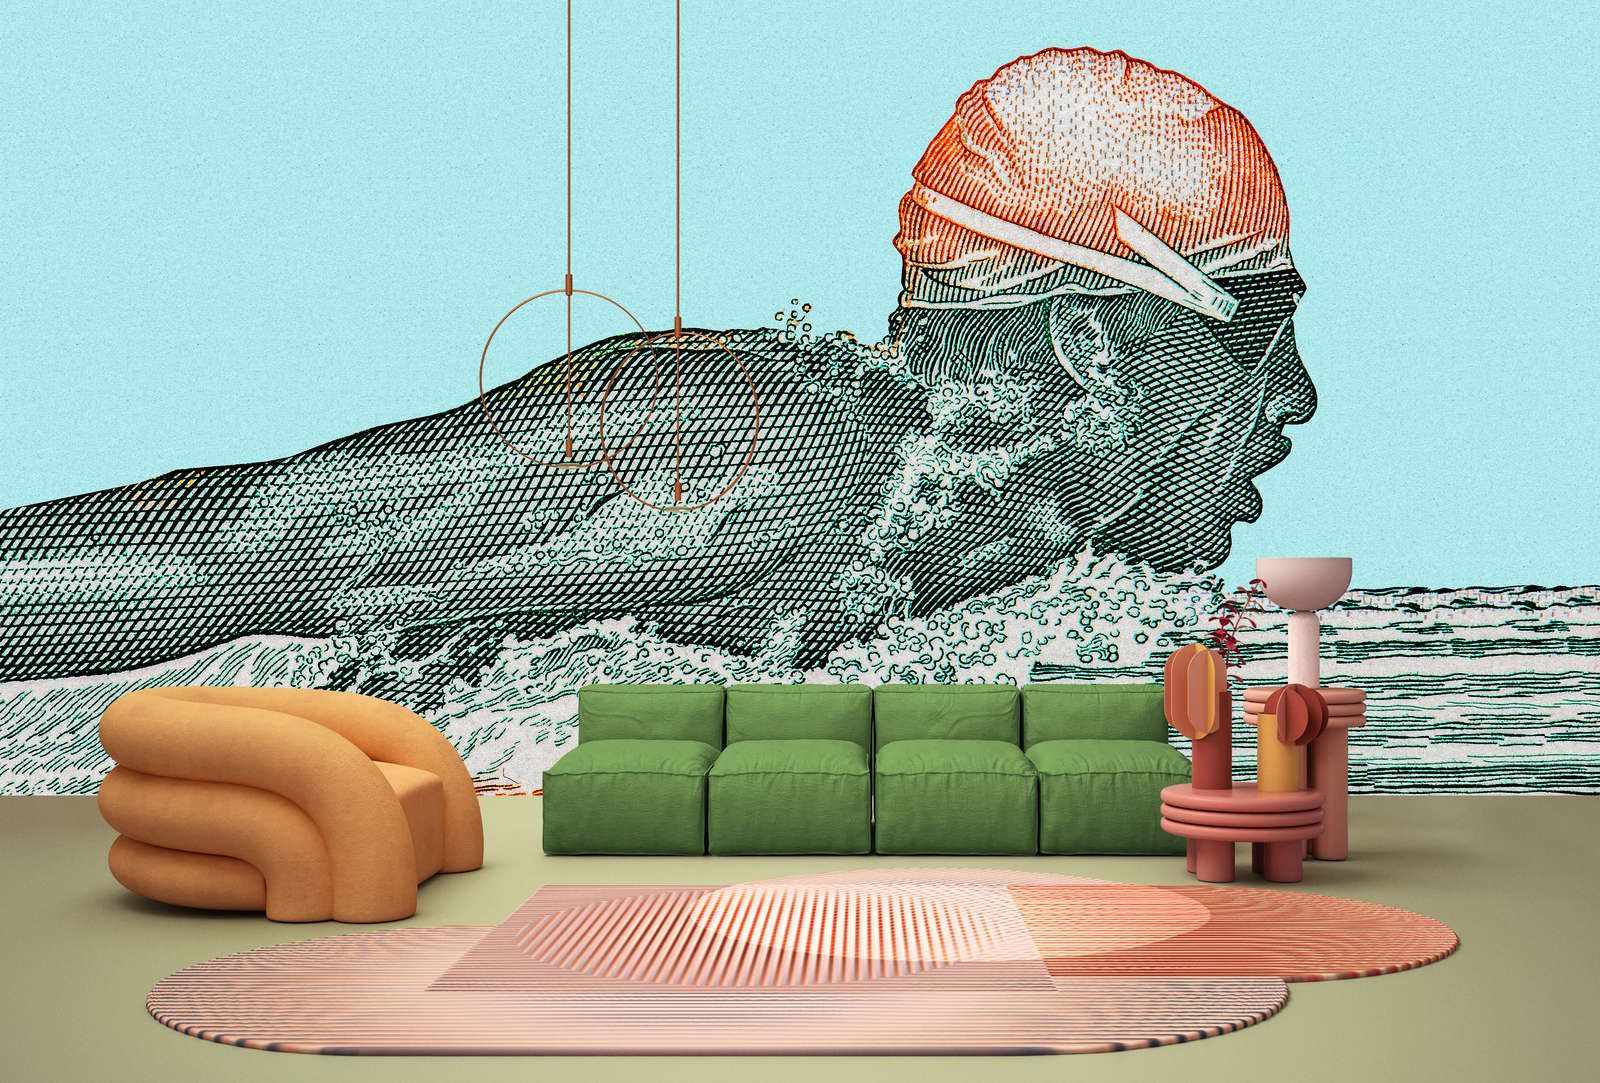             Fotomurali »aquaman« - nuotatore in design pixel - benzina con texture carta kraft | tessuto non tessuto leggermente strutturato
        